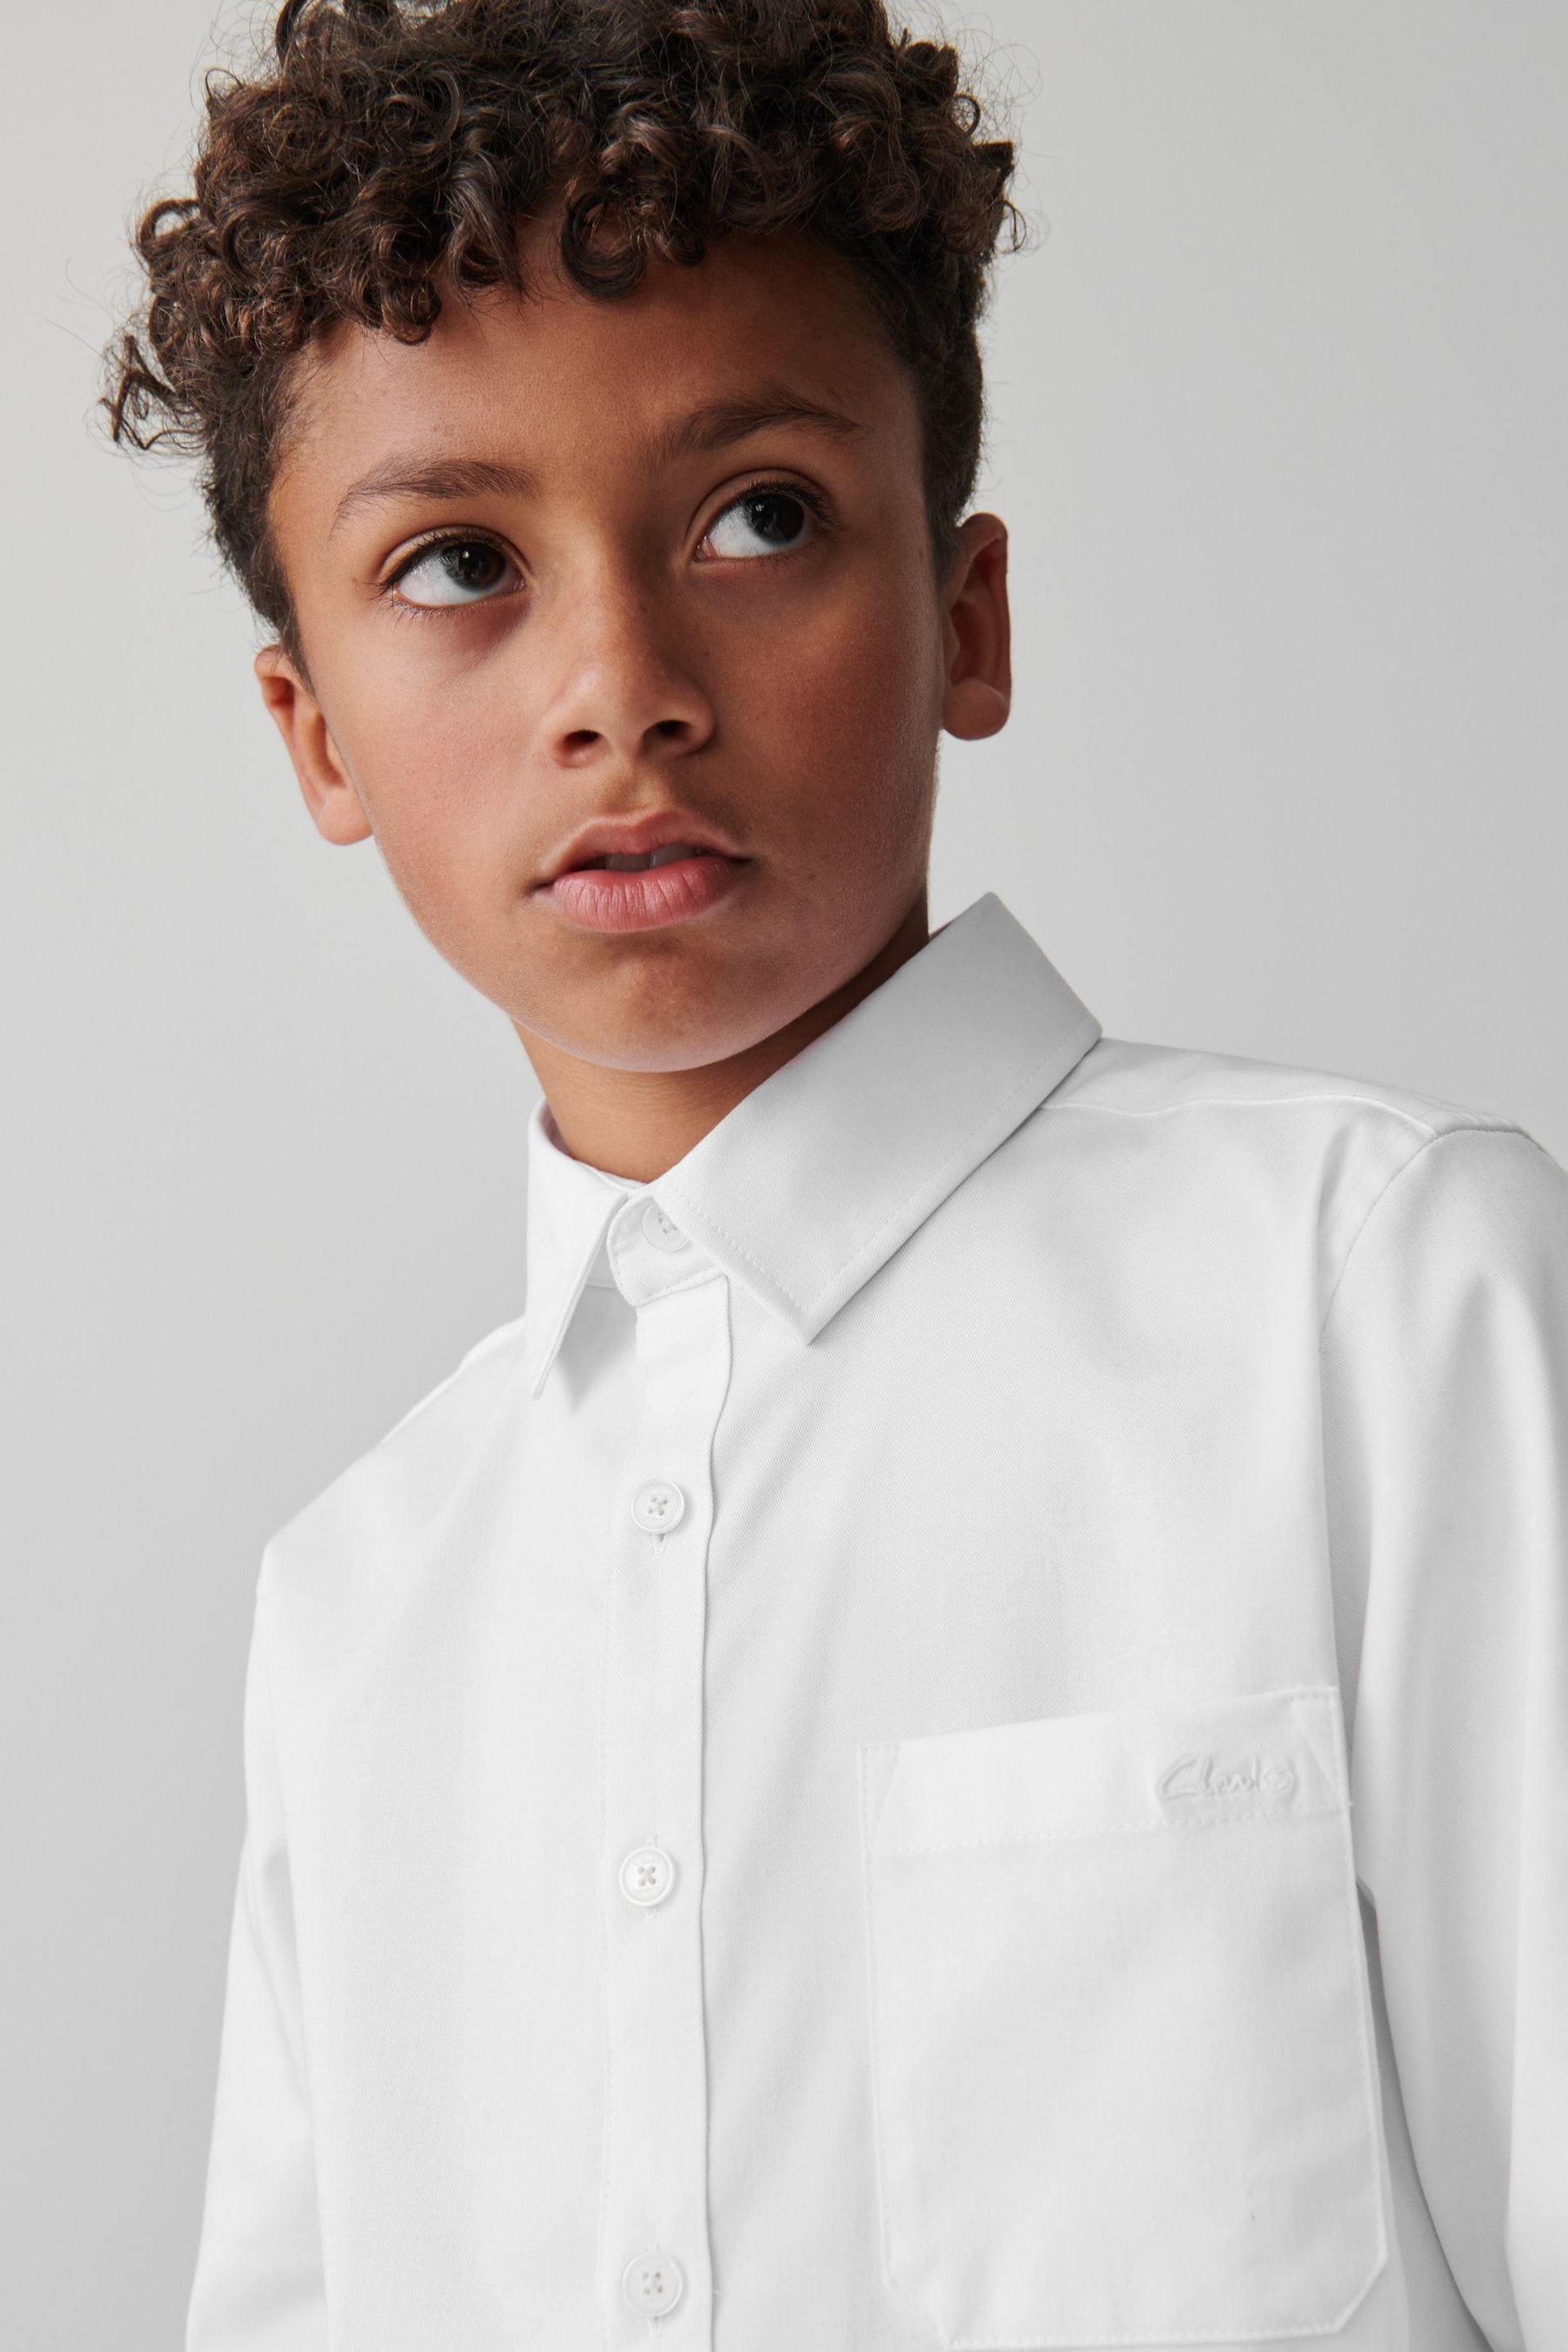 Clarks White Long Sleeve Senior Boys School Shirt with Stretch - Image 5 of 7